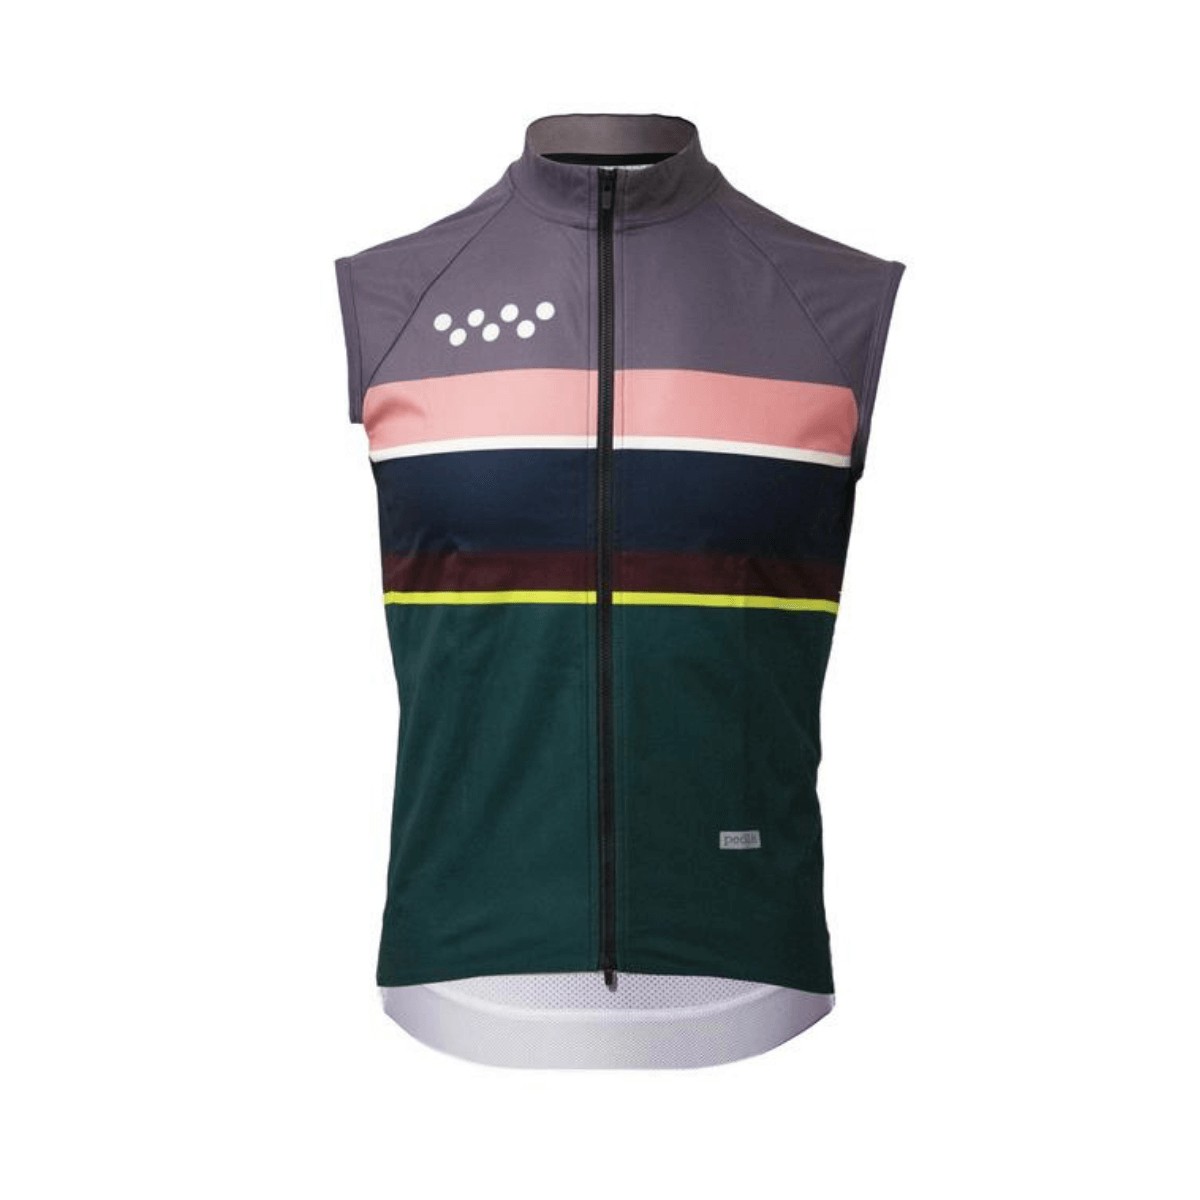 Pedla WindTech Green Vest, Size M